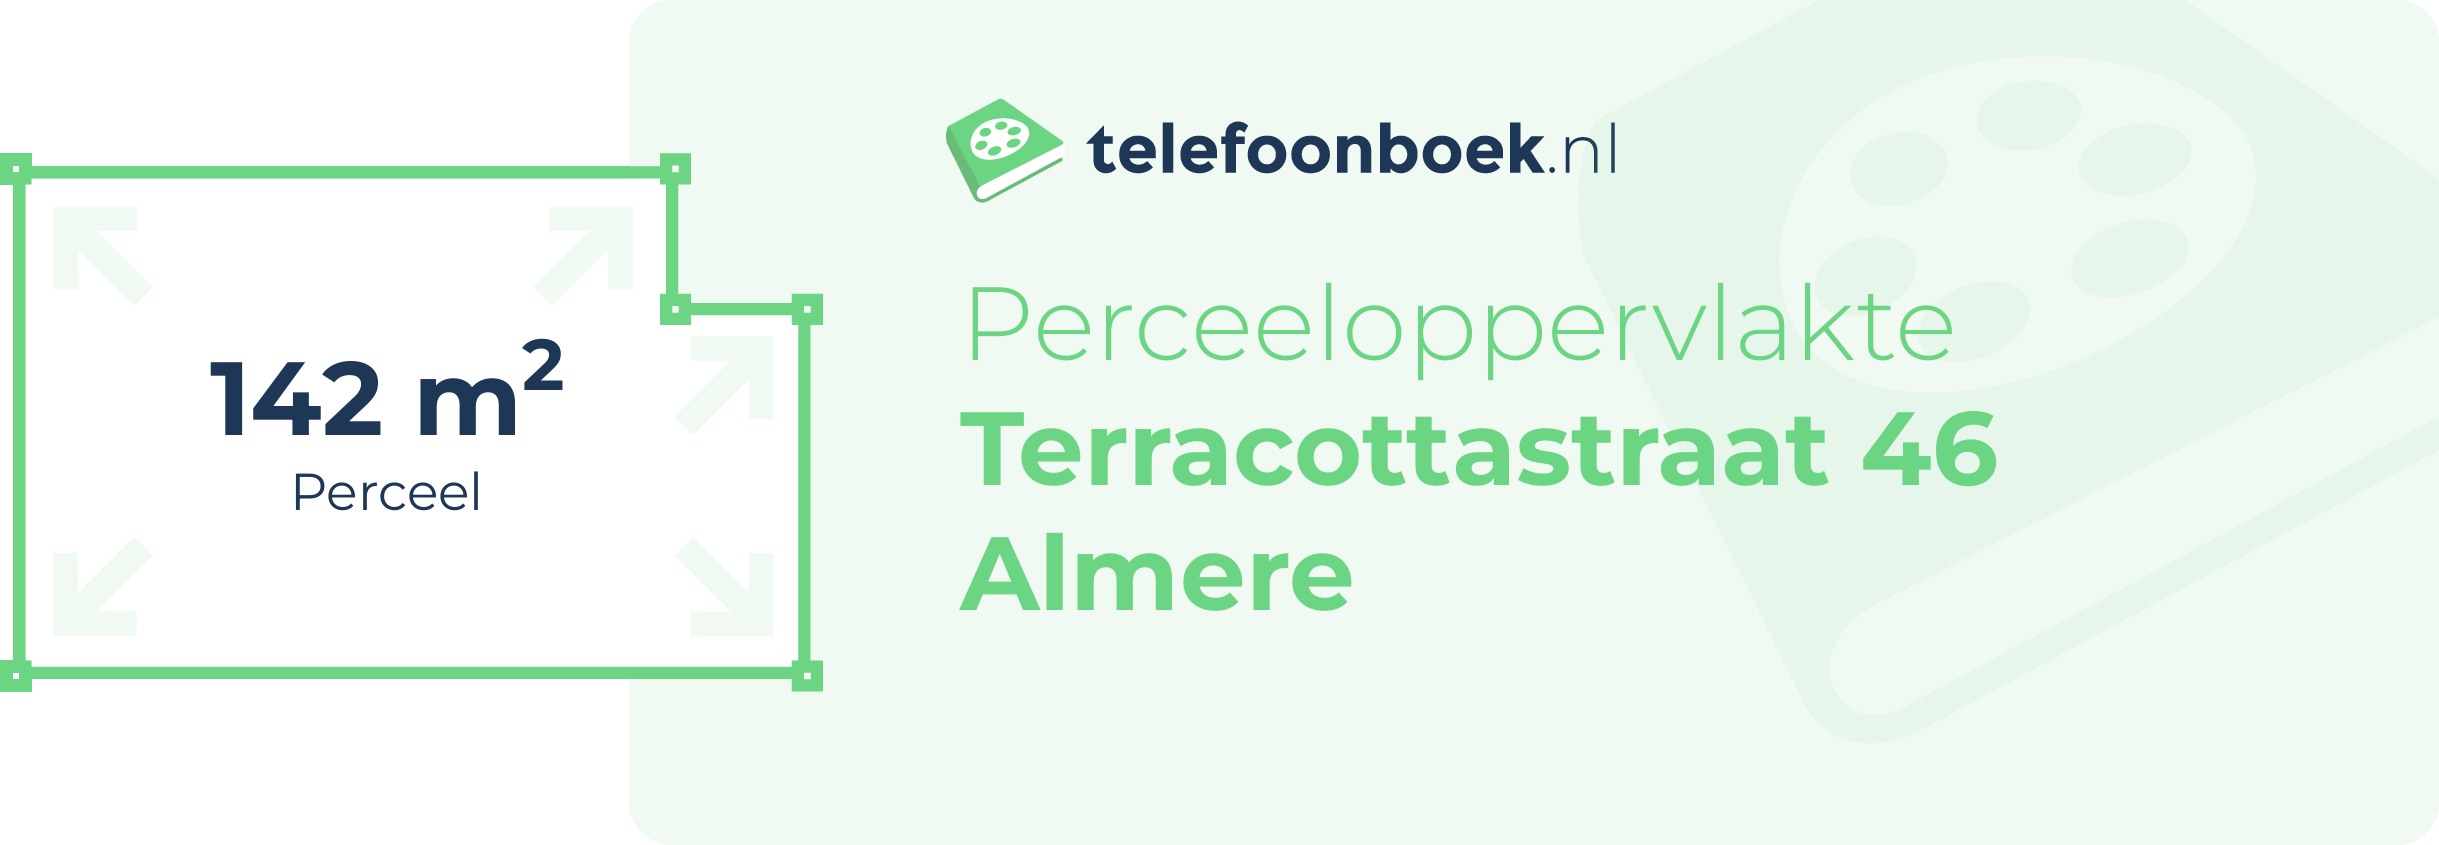 Perceeloppervlakte Terracottastraat 46 Almere